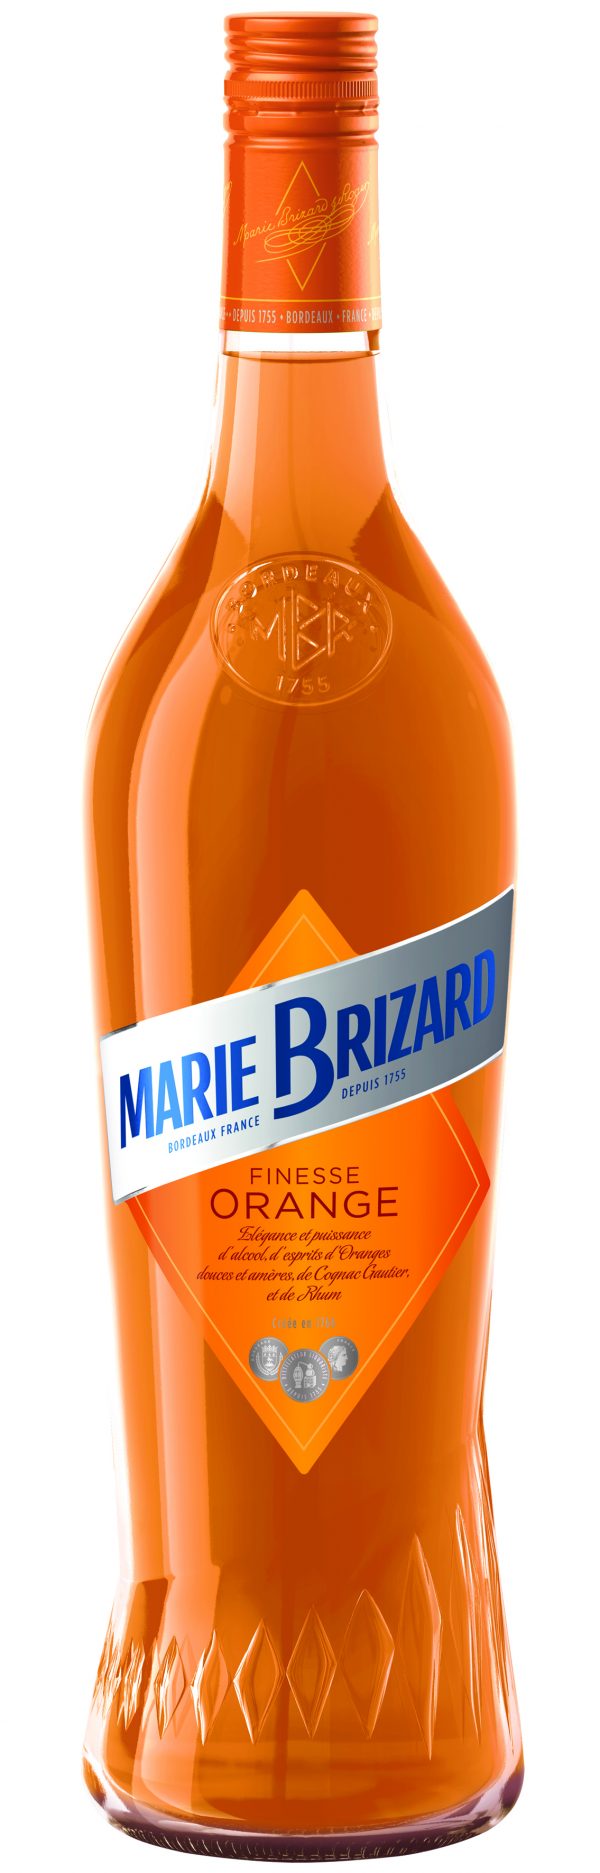 M. Brizard Grand Orange